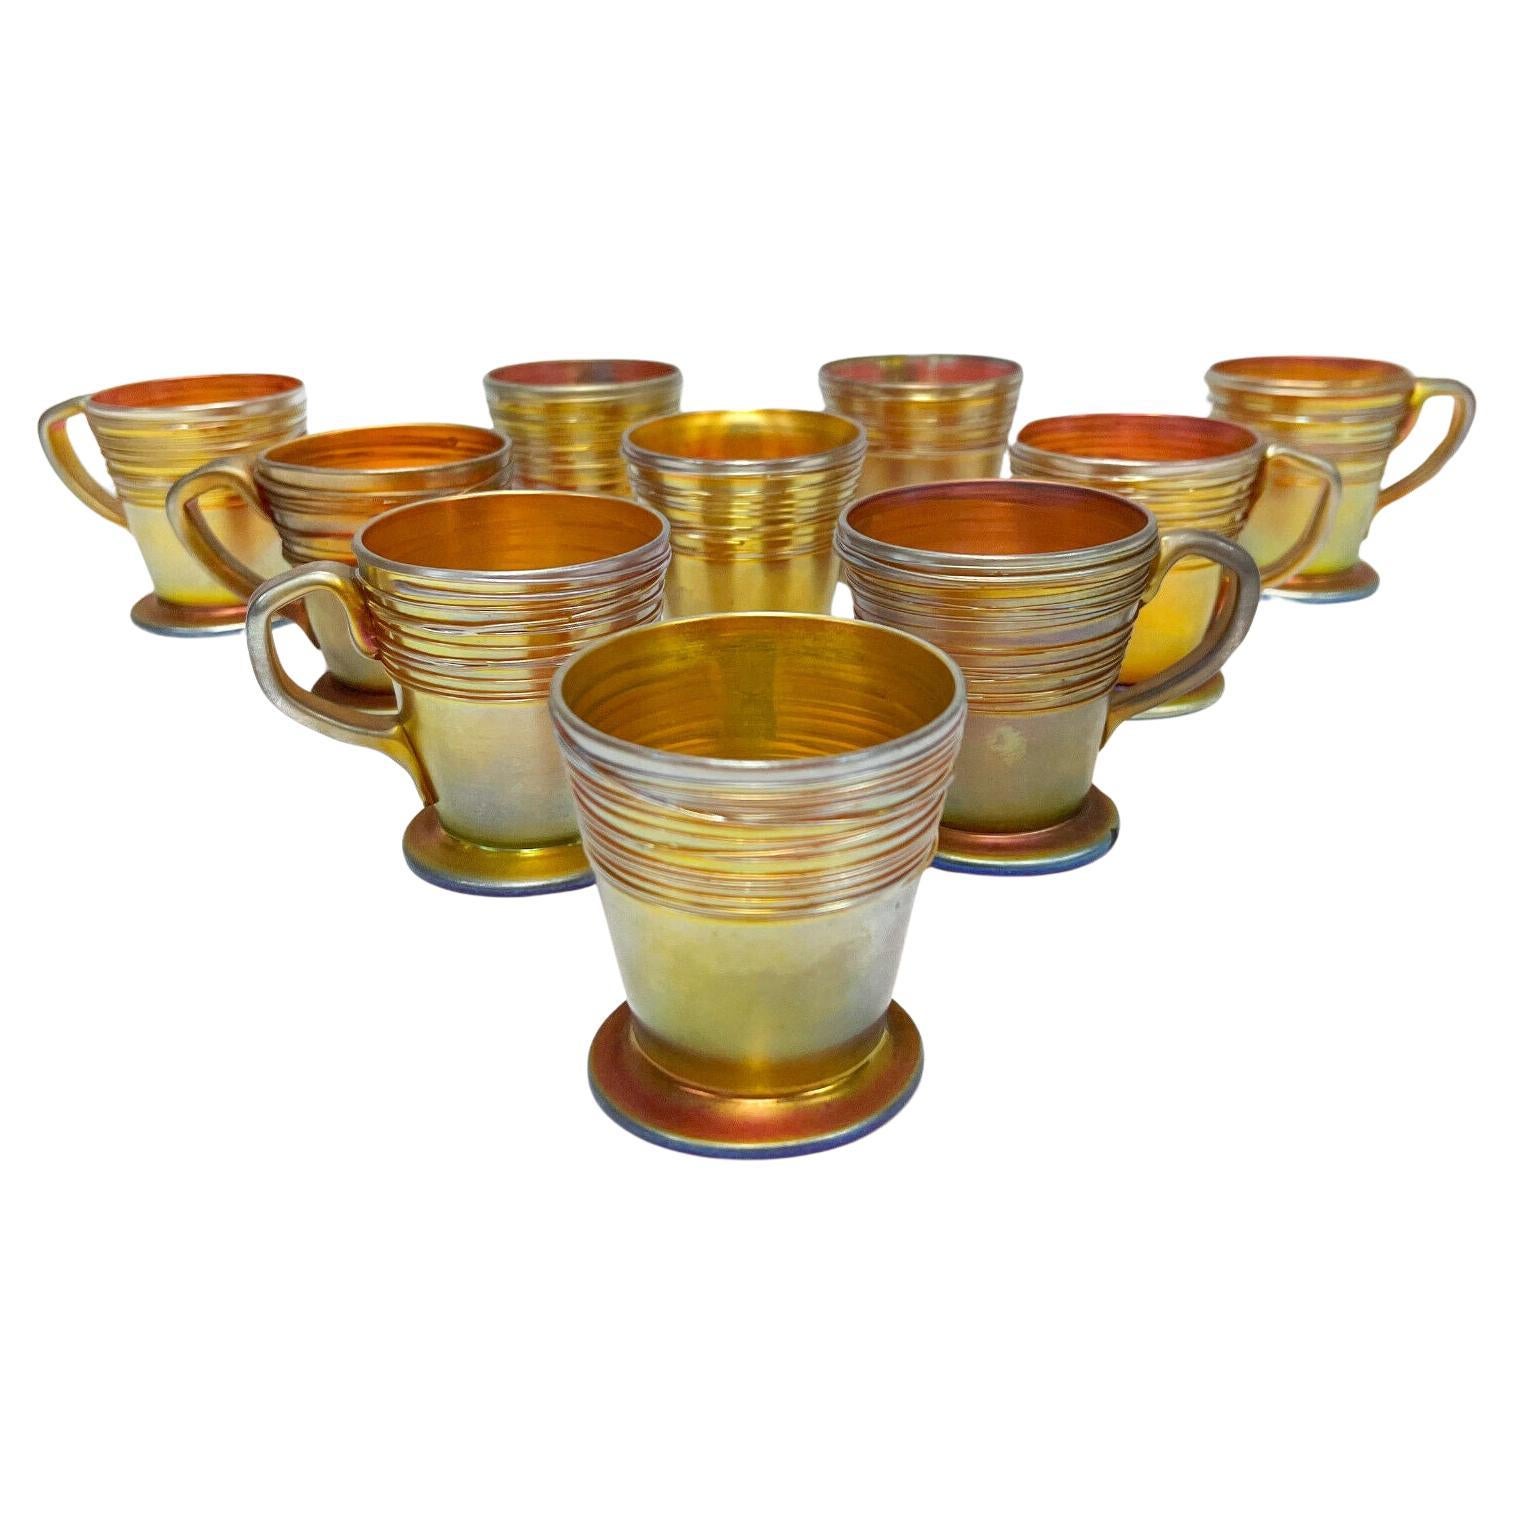  10 Steuben 4 ounce Gold Aurene Handled Threaded Cocktail Glass Cups #6333 For Sale